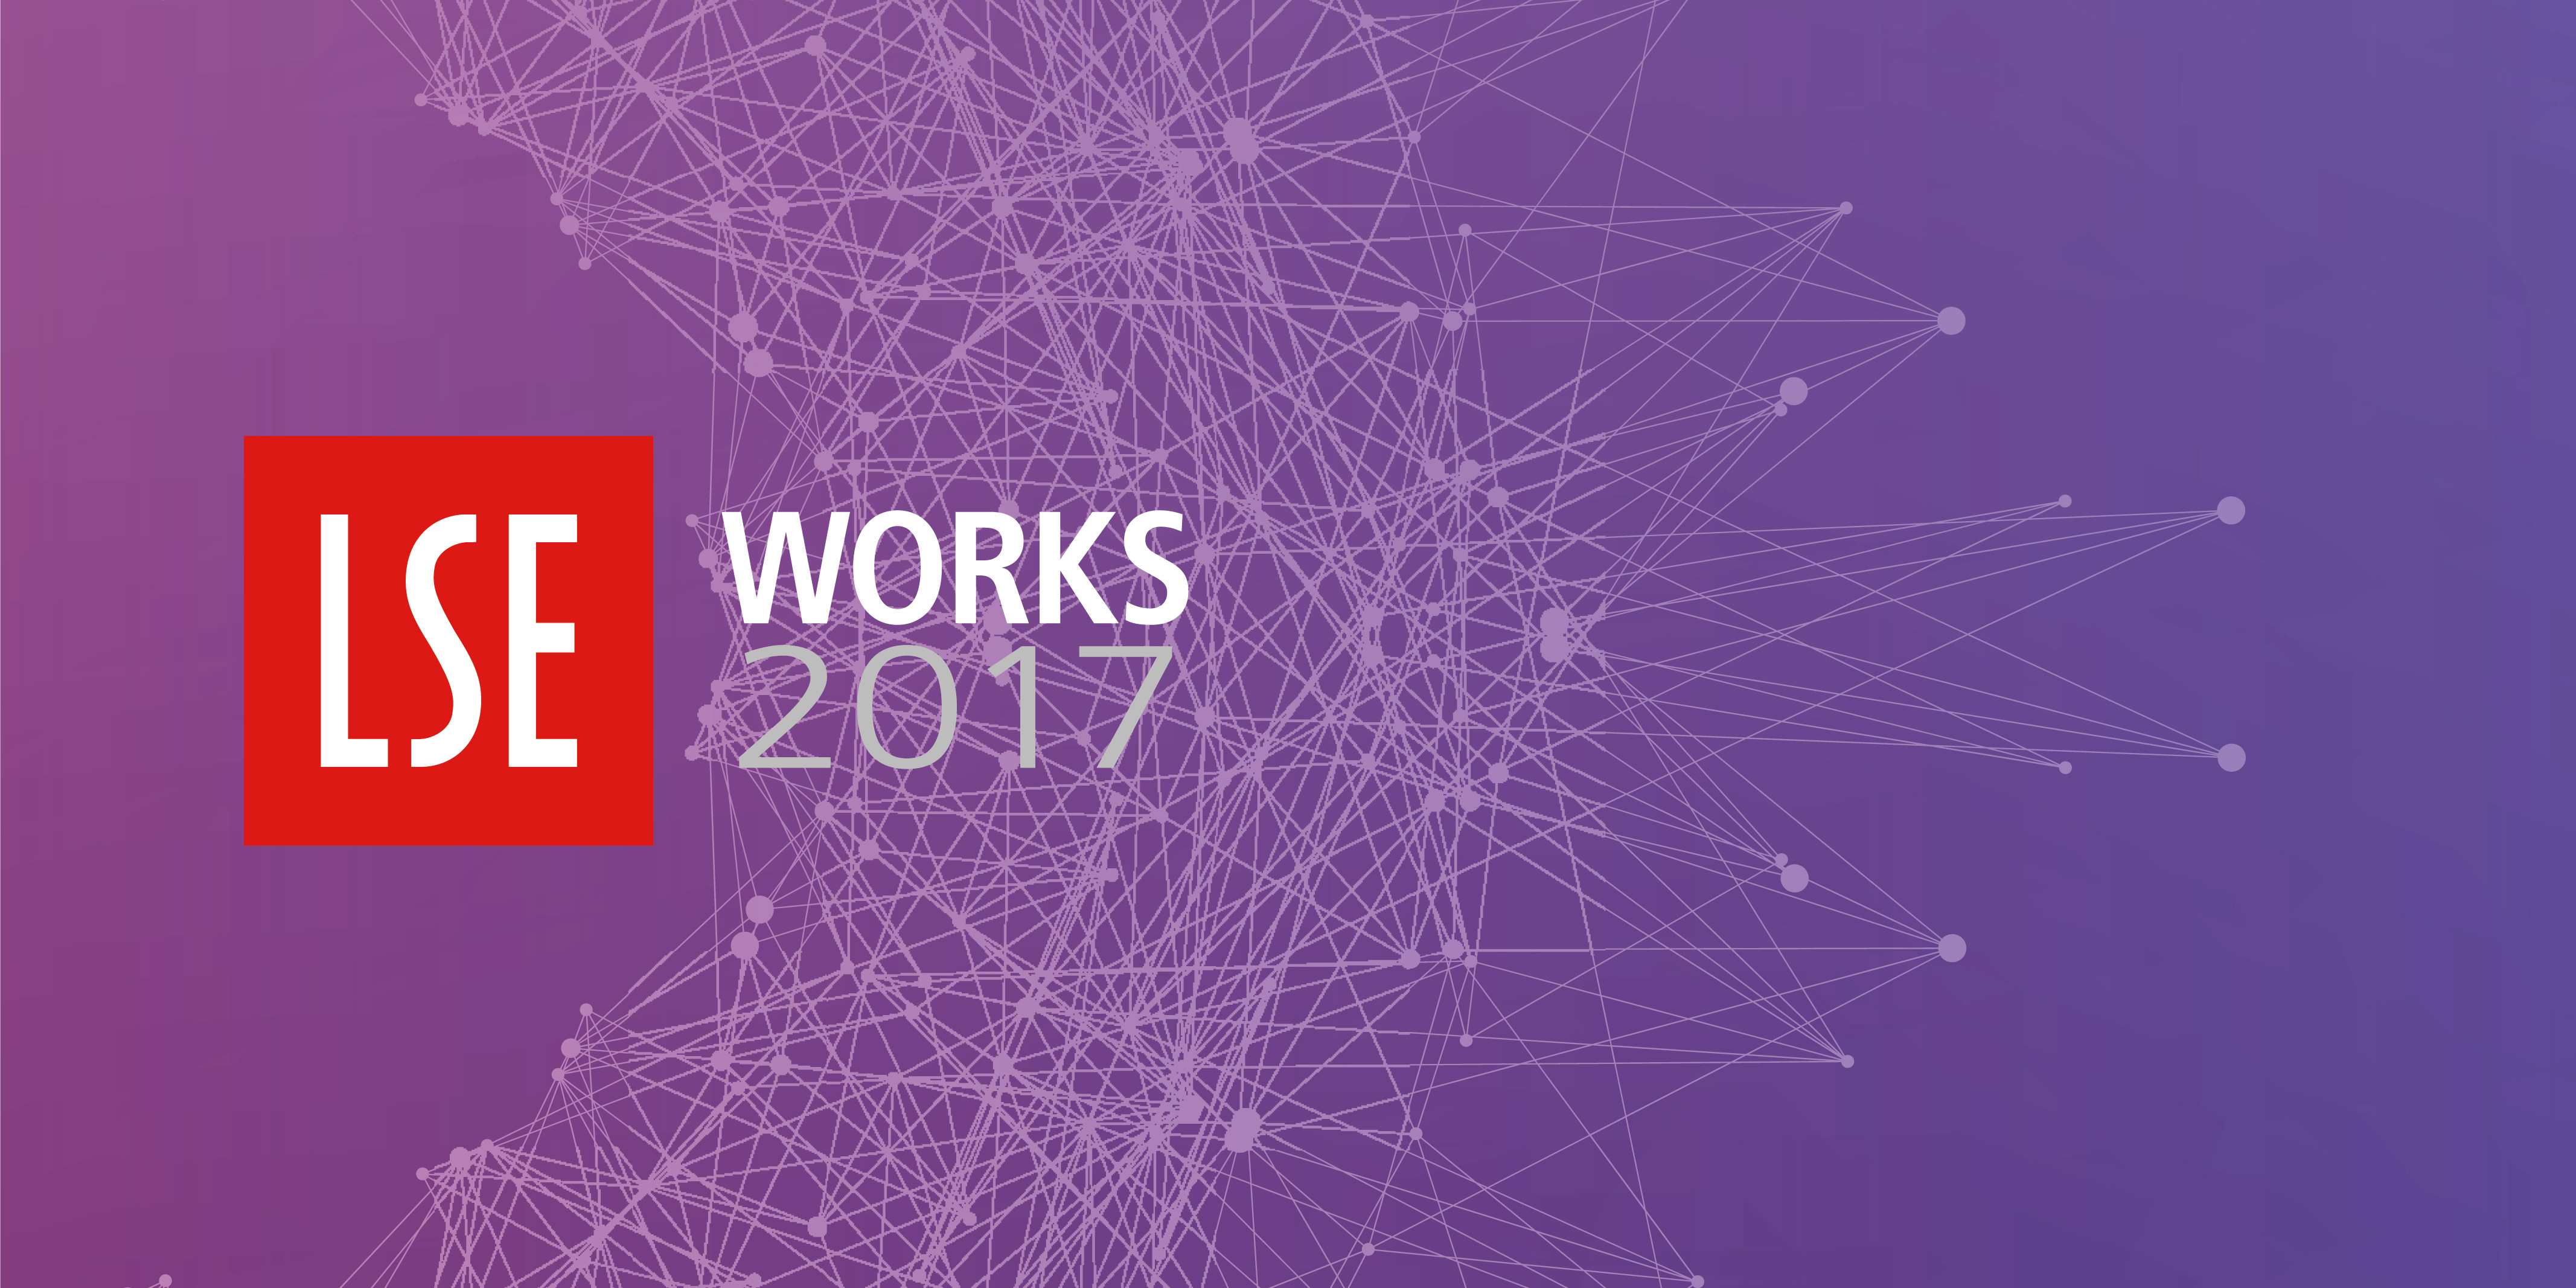 LSE Works 2017 promo image